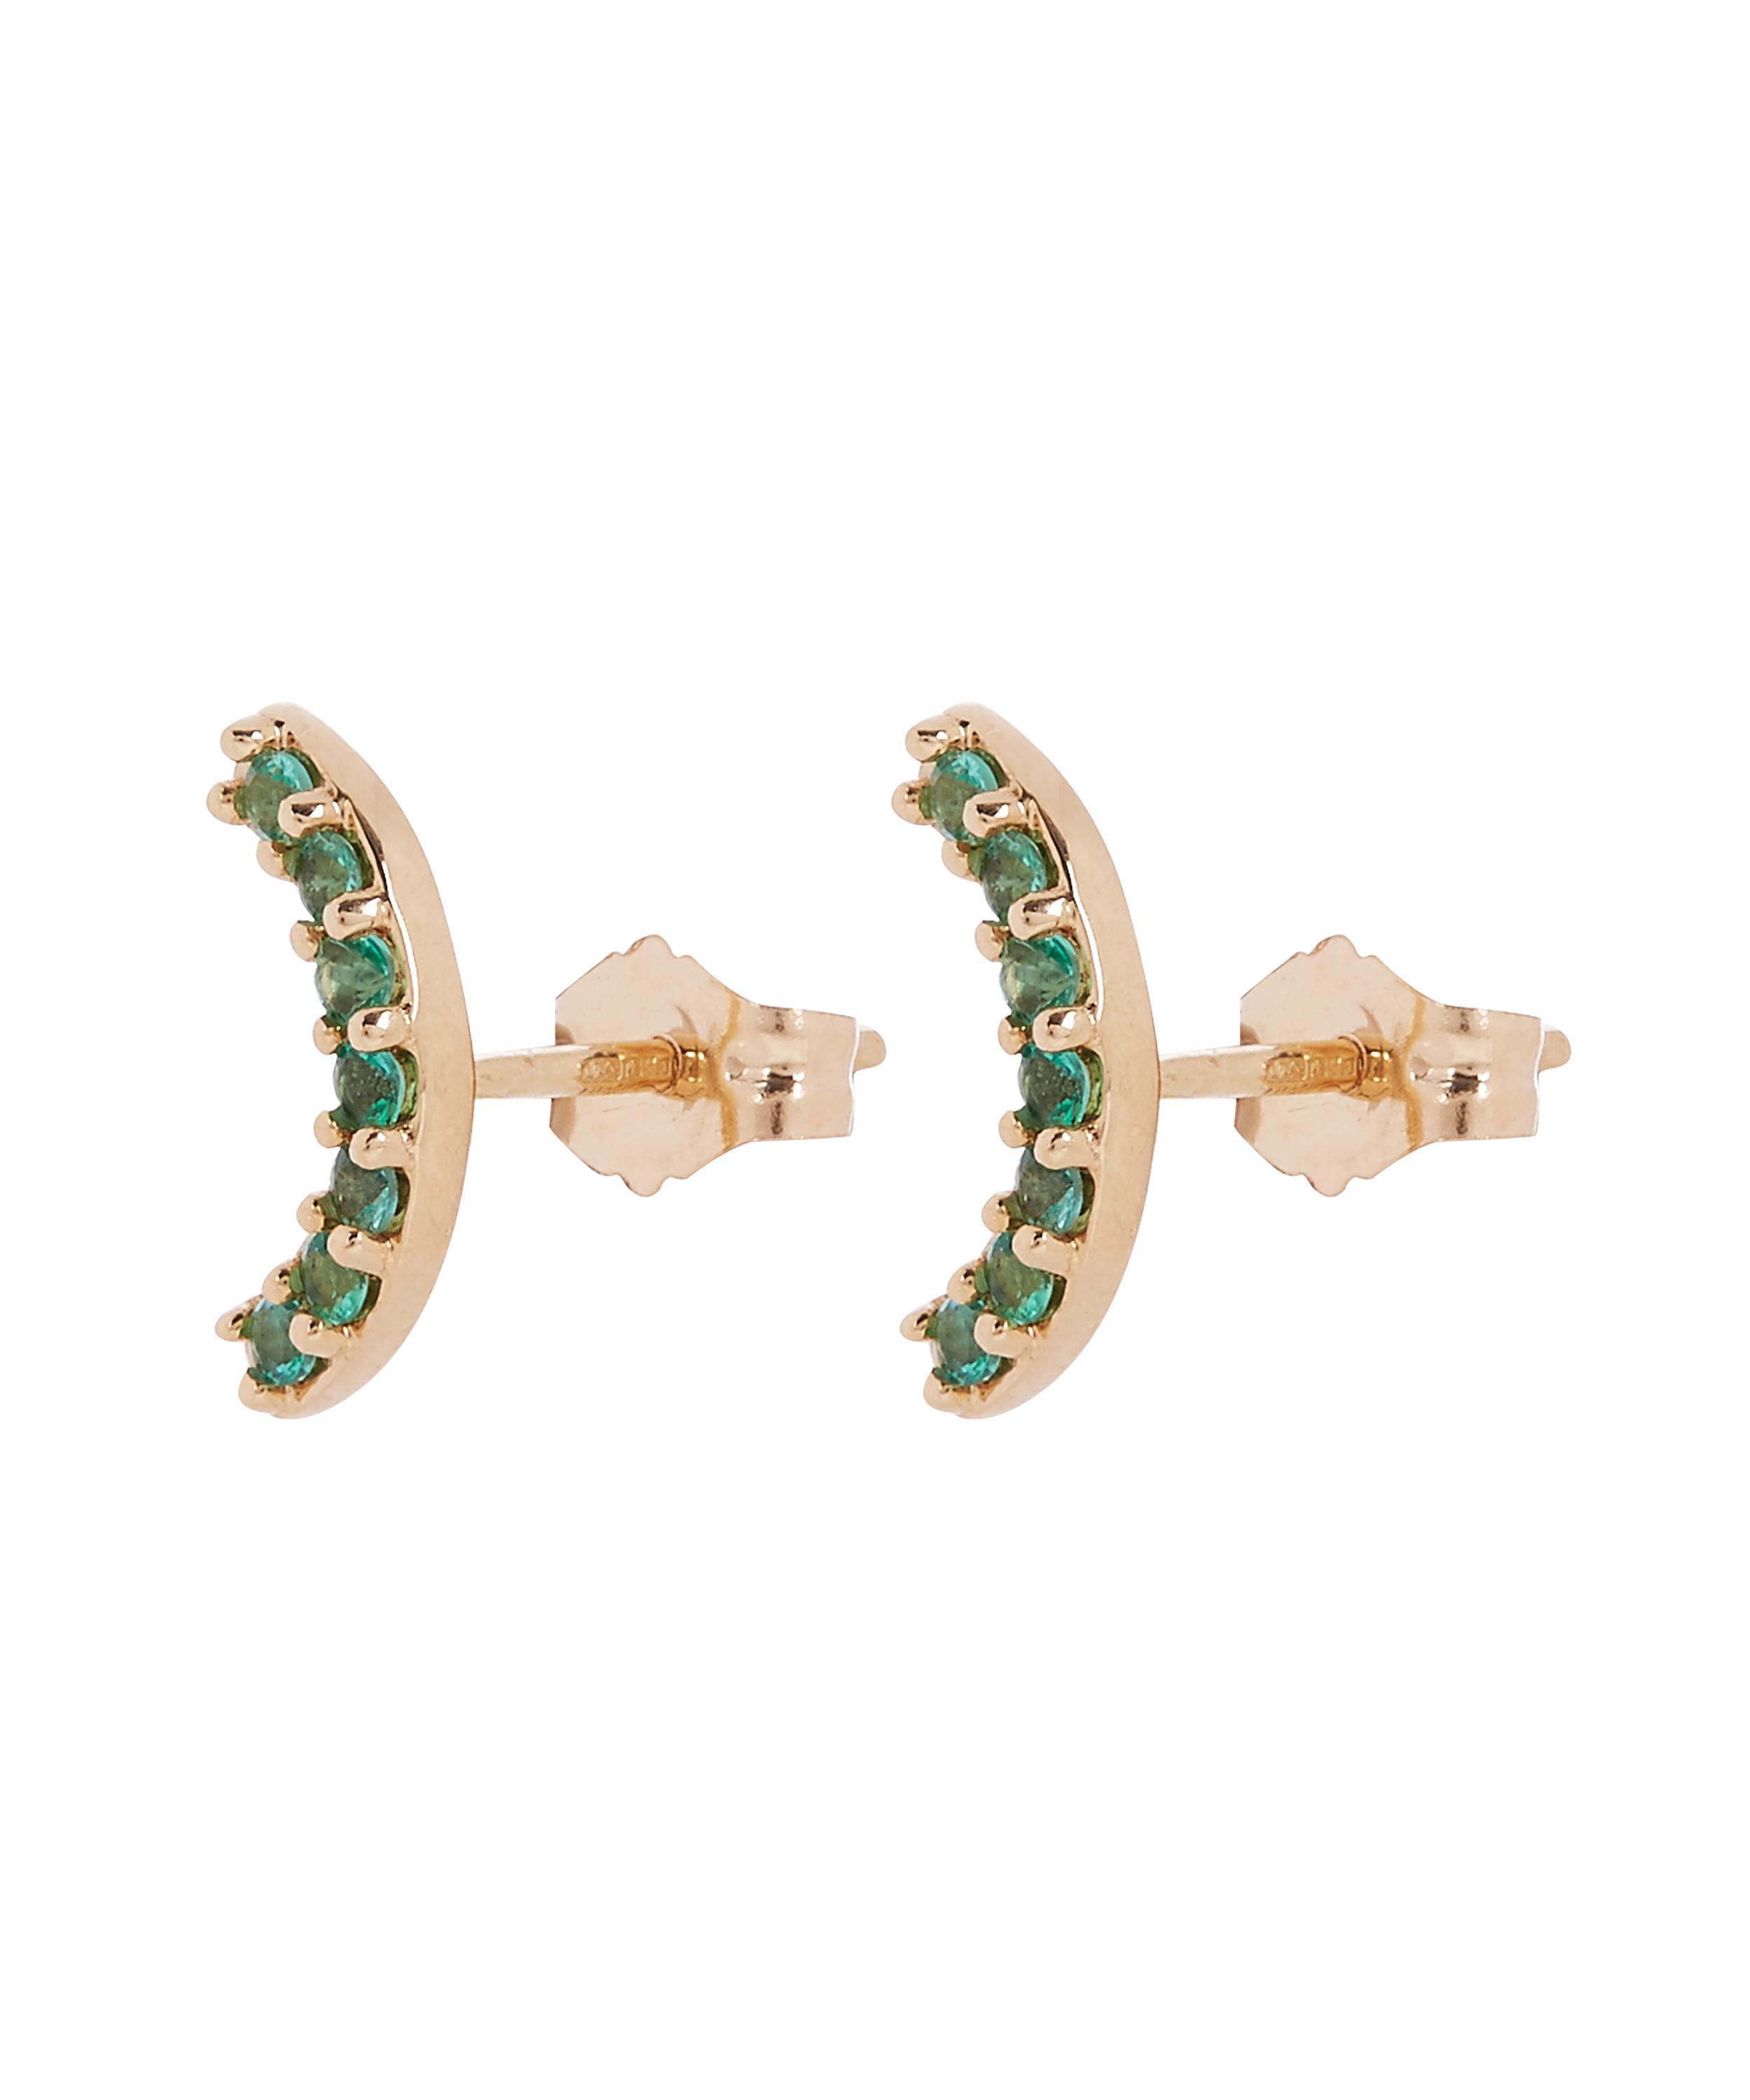 Lyst - Andrea Fohrman Gold Emerald Rainbow Stud Earring in Metallic